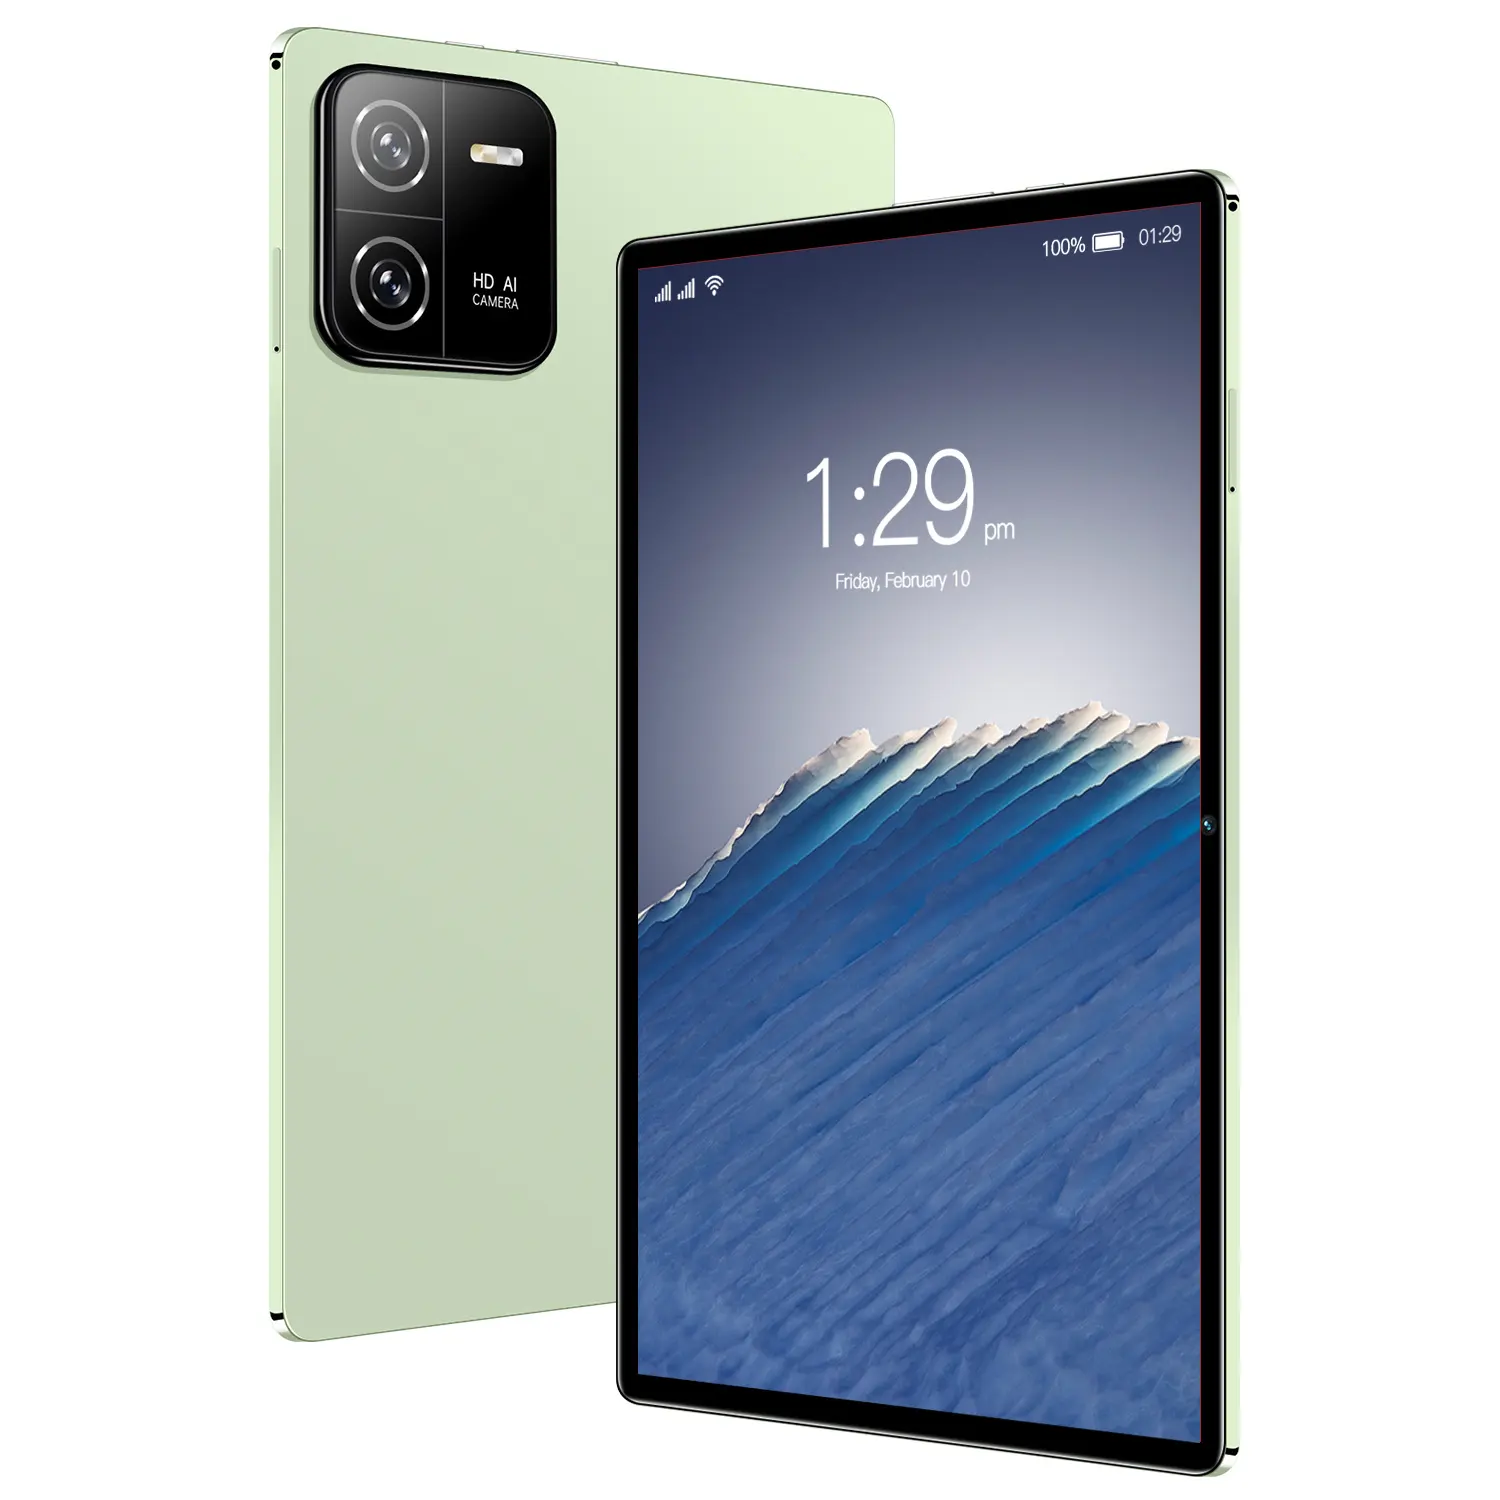 neu 10 zoll android smart tablet pad6pro wlan bluetooth gps 3g anruf